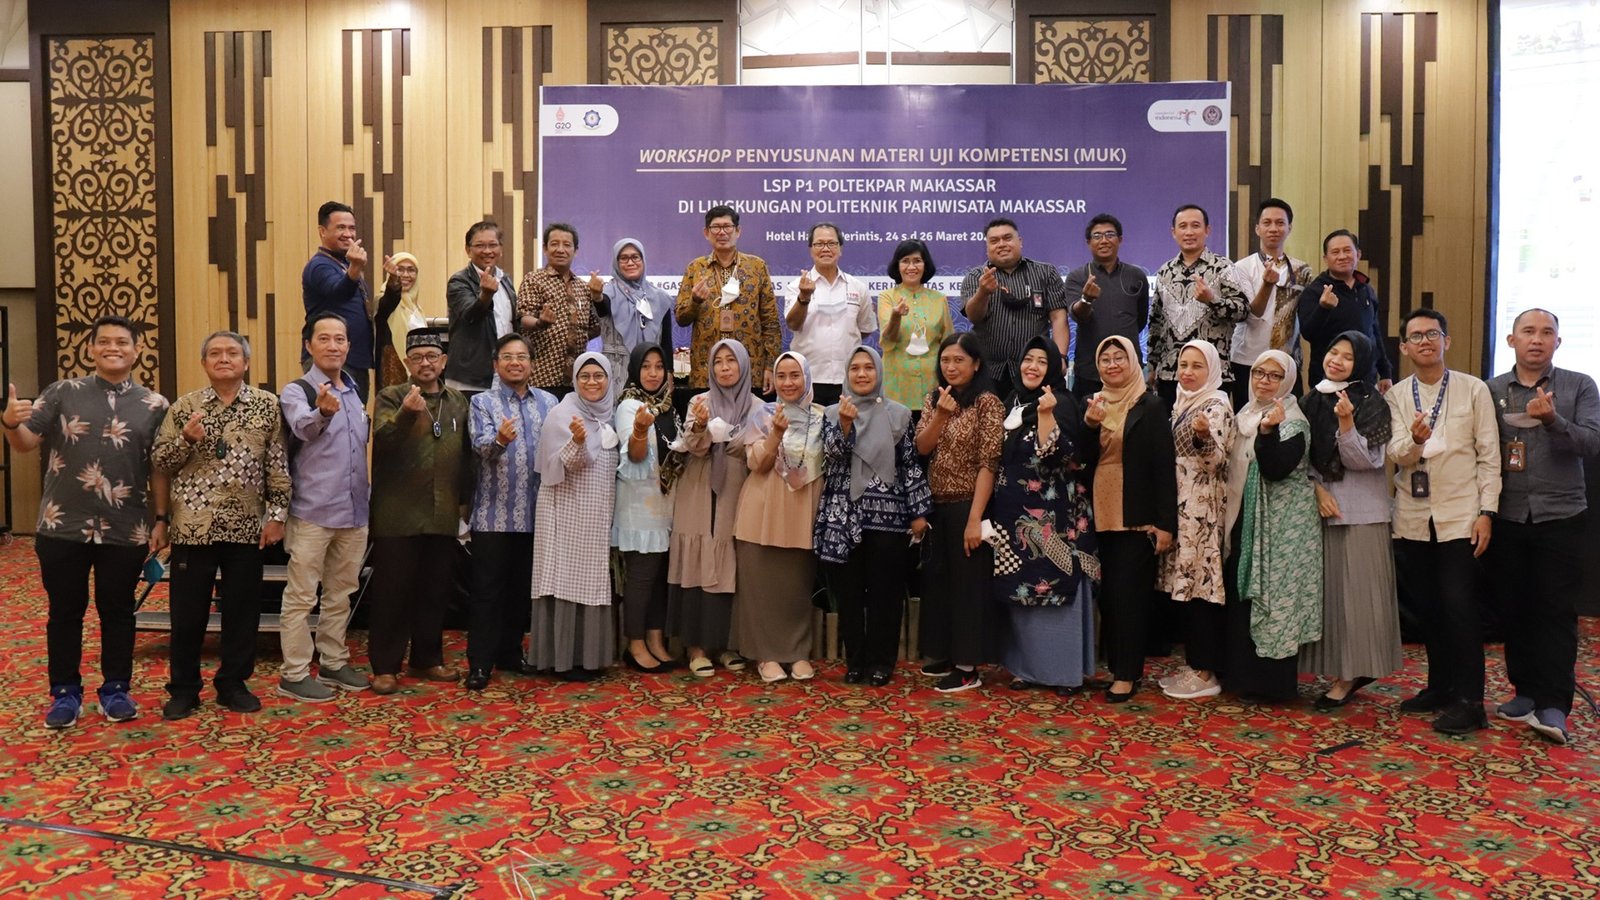 LSP Poltekpar Makassar laksanakan Workshop Penyusunan Materi Uji Kompetensi1 ADAPADA.COM